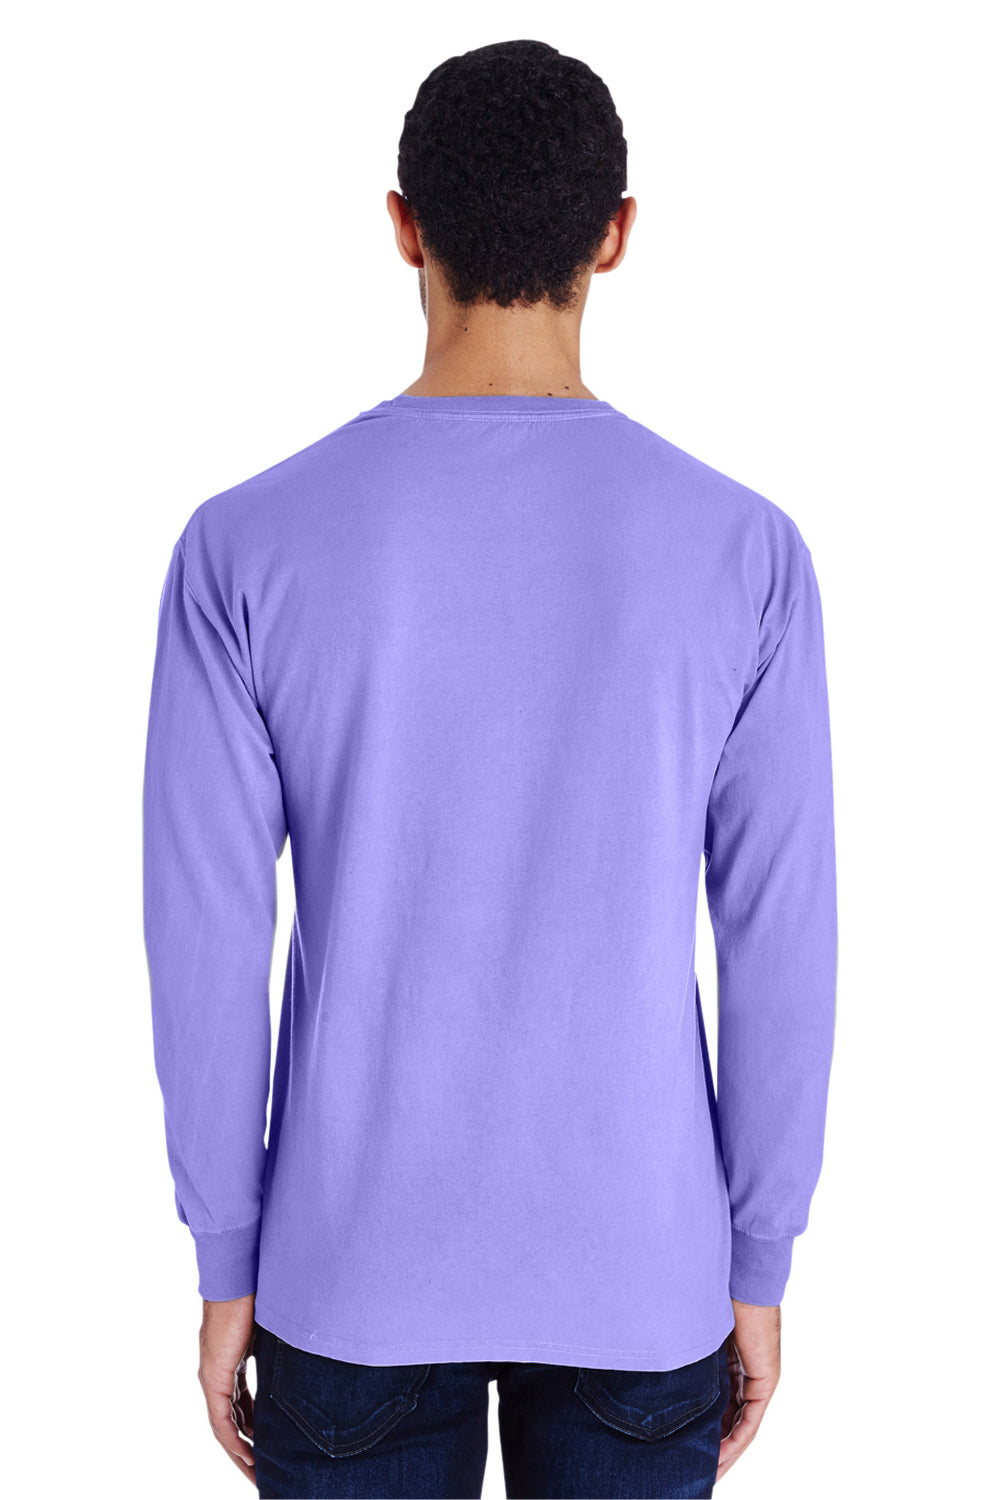 ComfortWash by Hanes GDH200 Long Sleeve Crewneck T-Shirt Lavender Purple Back